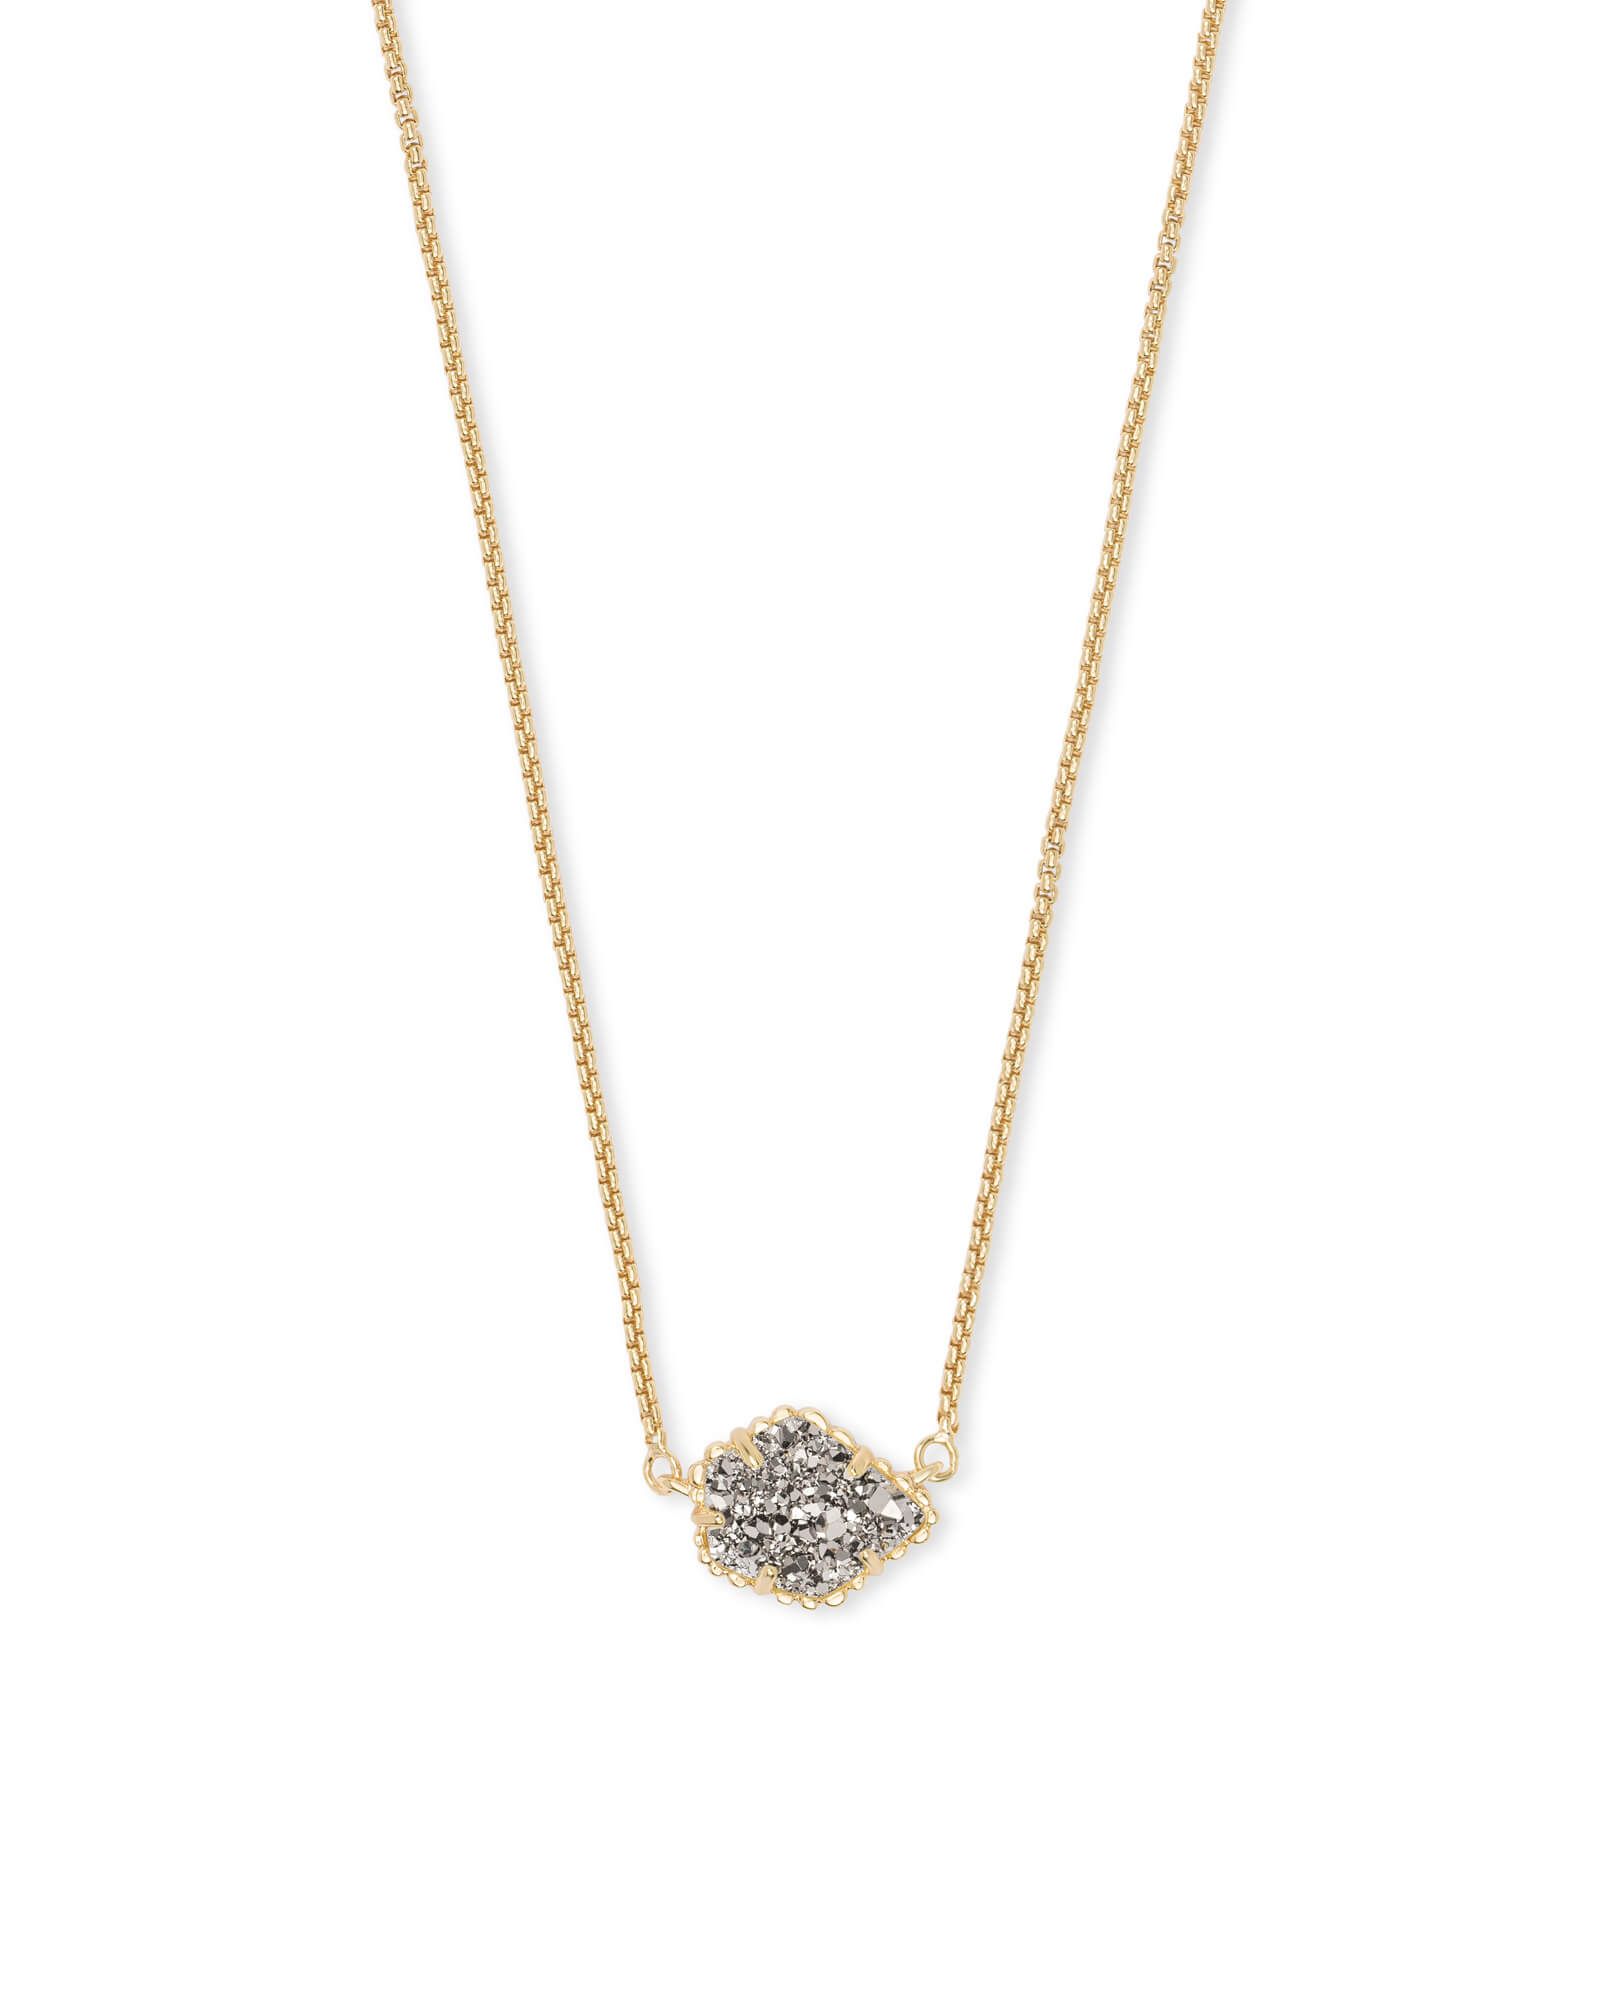 Tess Gold Pendant Necklace in Platinum Drusy | Kendra Scott | Kendra Scott